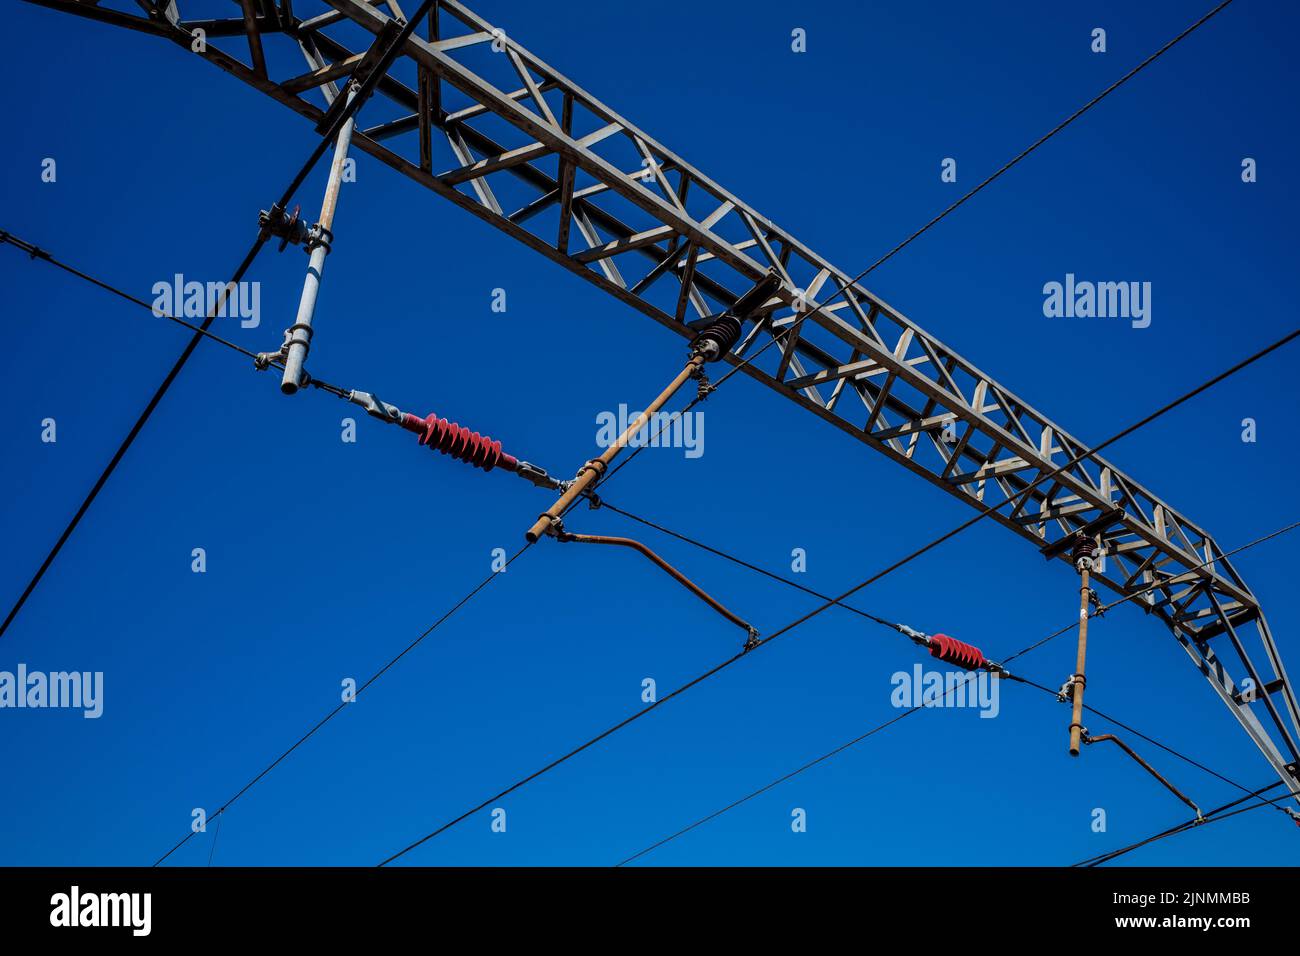 Overhead Cables UK railways. Overhead railway power cables in the UK. UK Railways Overhead Power Cables. Stock Photo